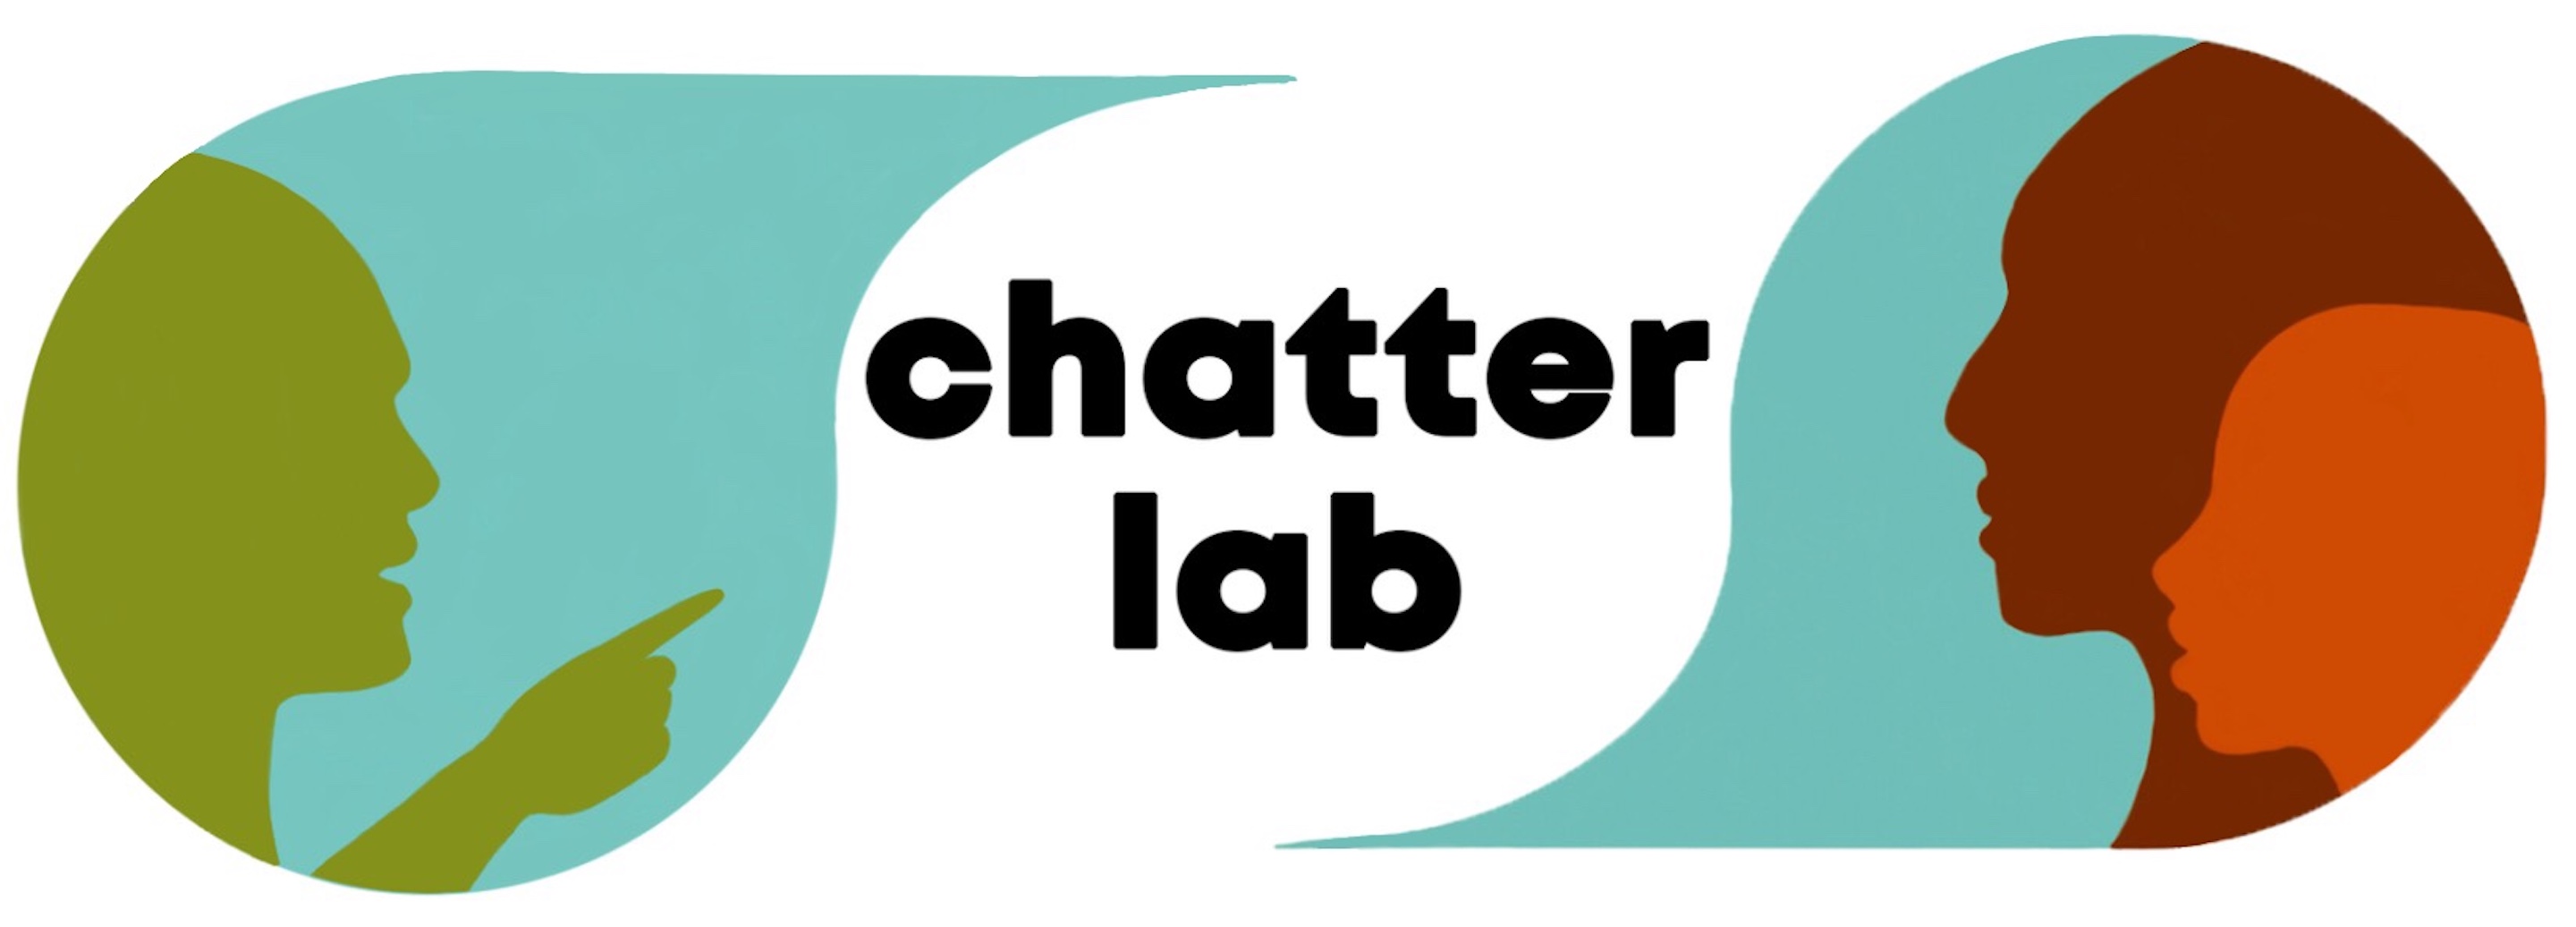 chatterlab-logo